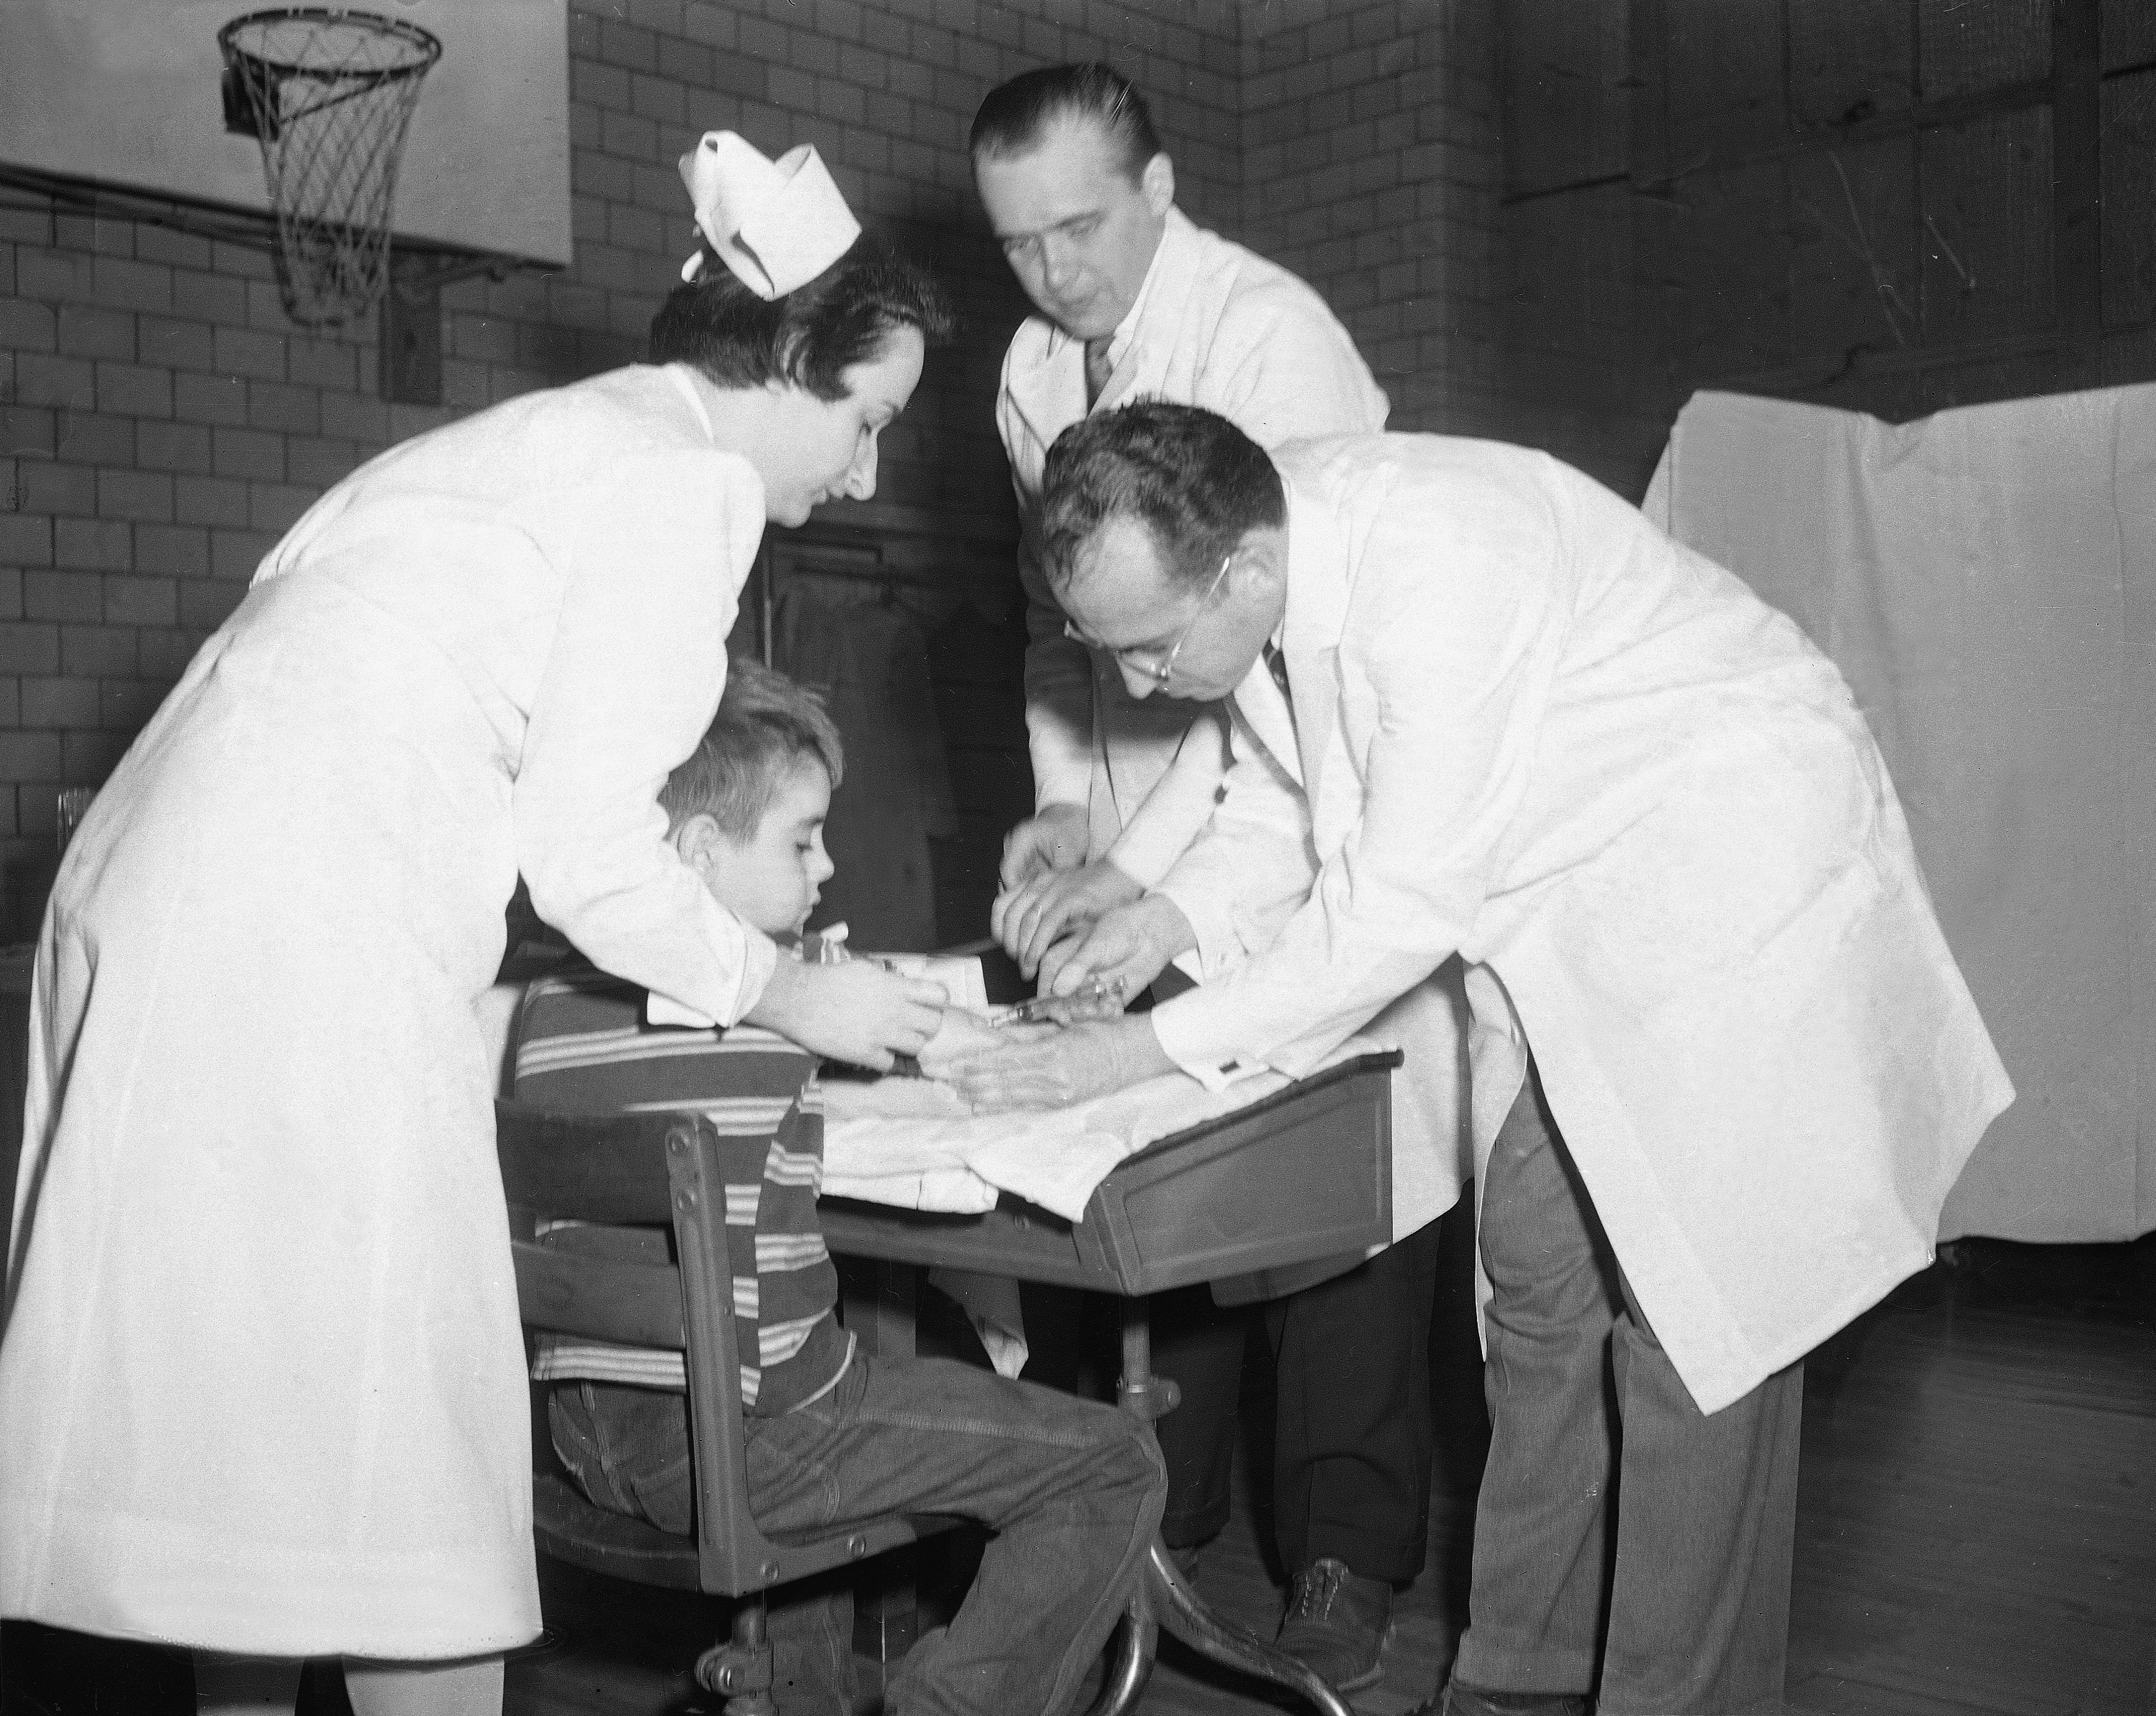 The Salk polio vaccine: "Greatest public health experiment in history" - CBS News